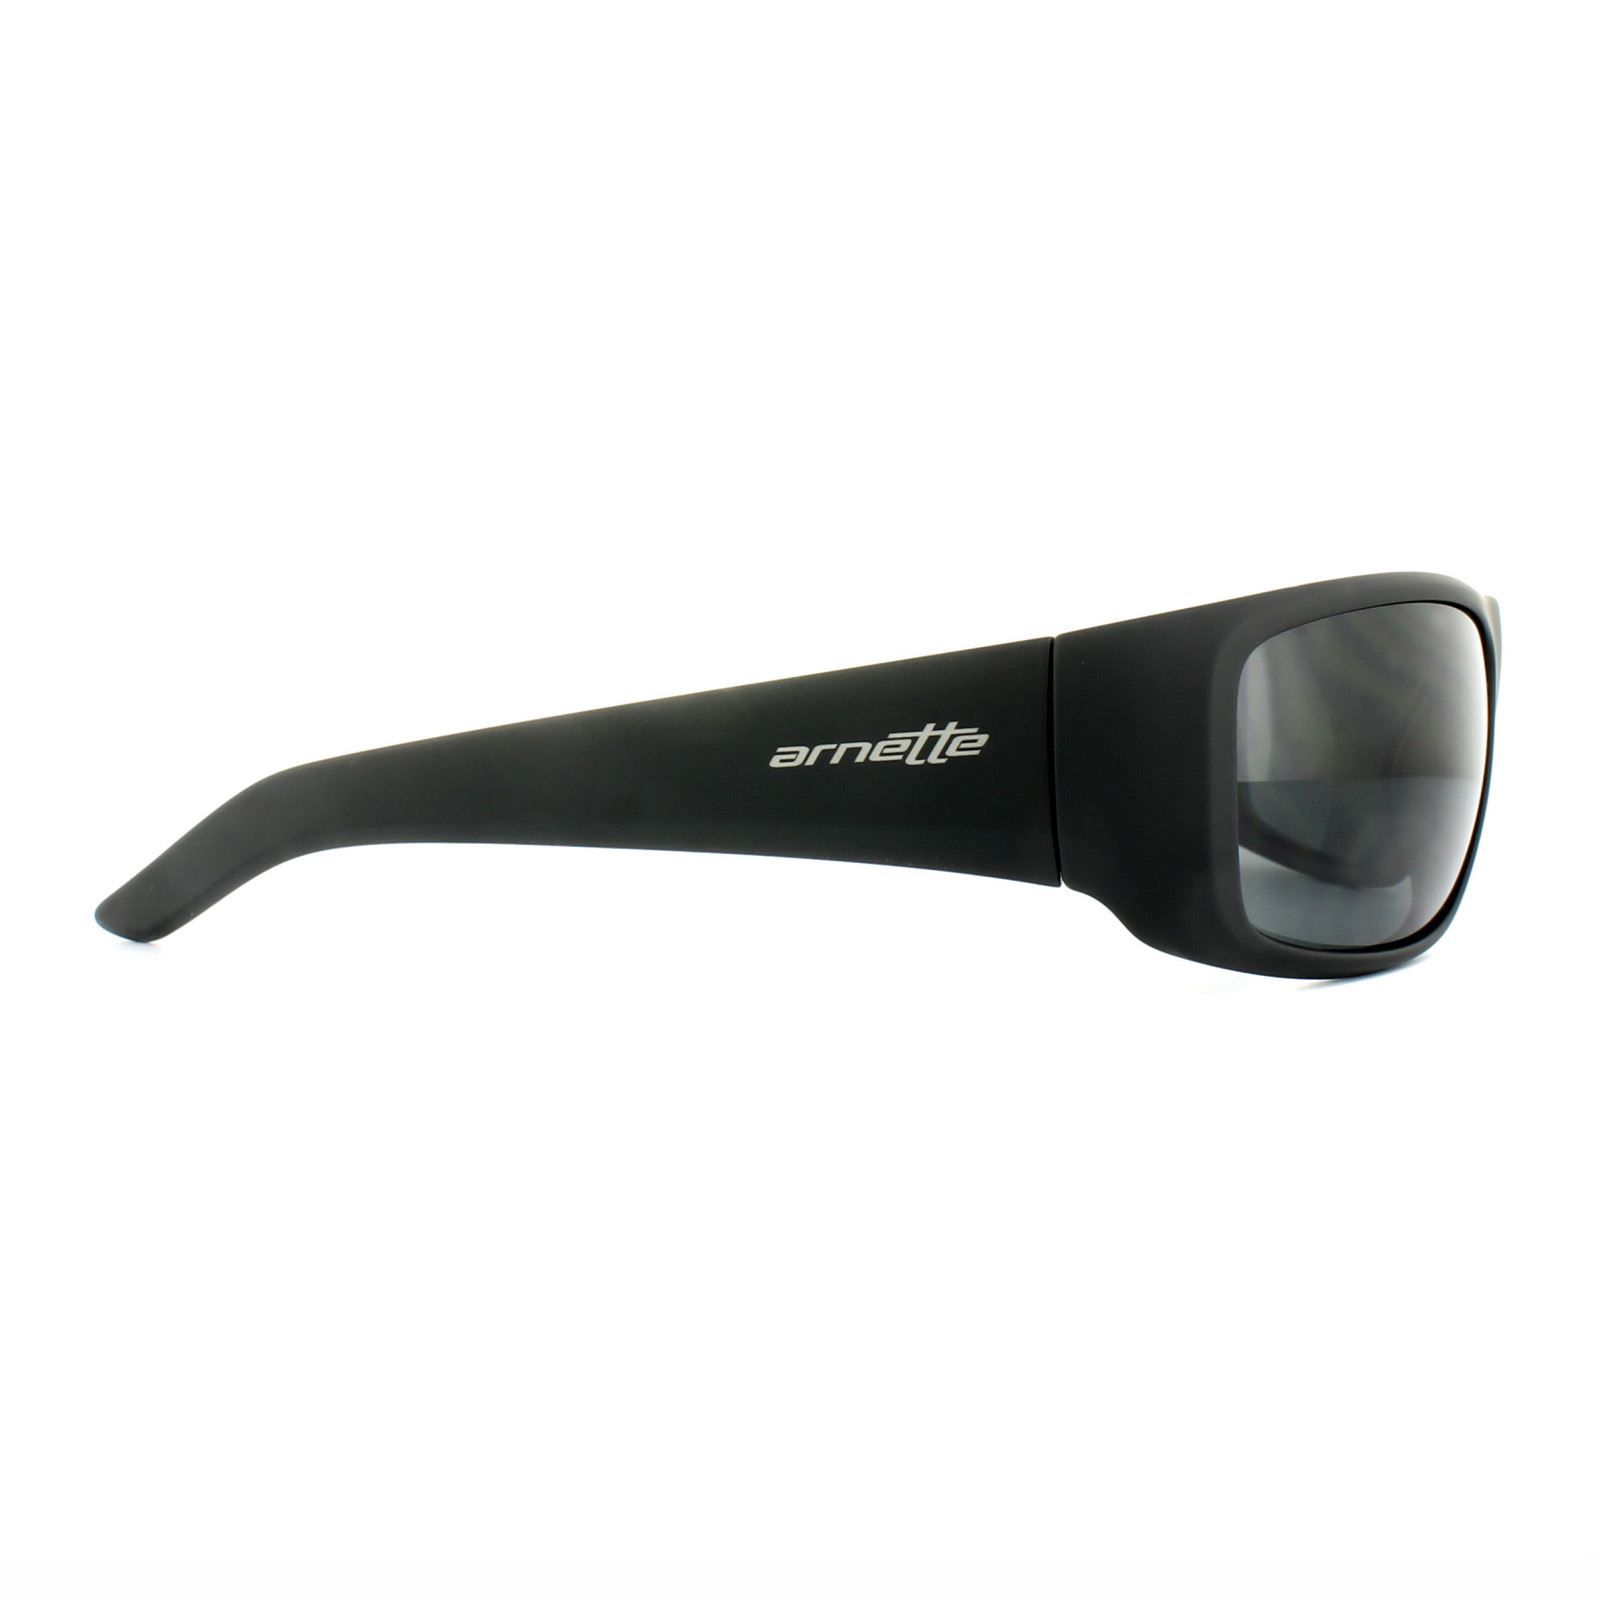 Arnette Sunglasses Hot Shot 4182 219687 Fuzzy Black Graphics Inside Grey